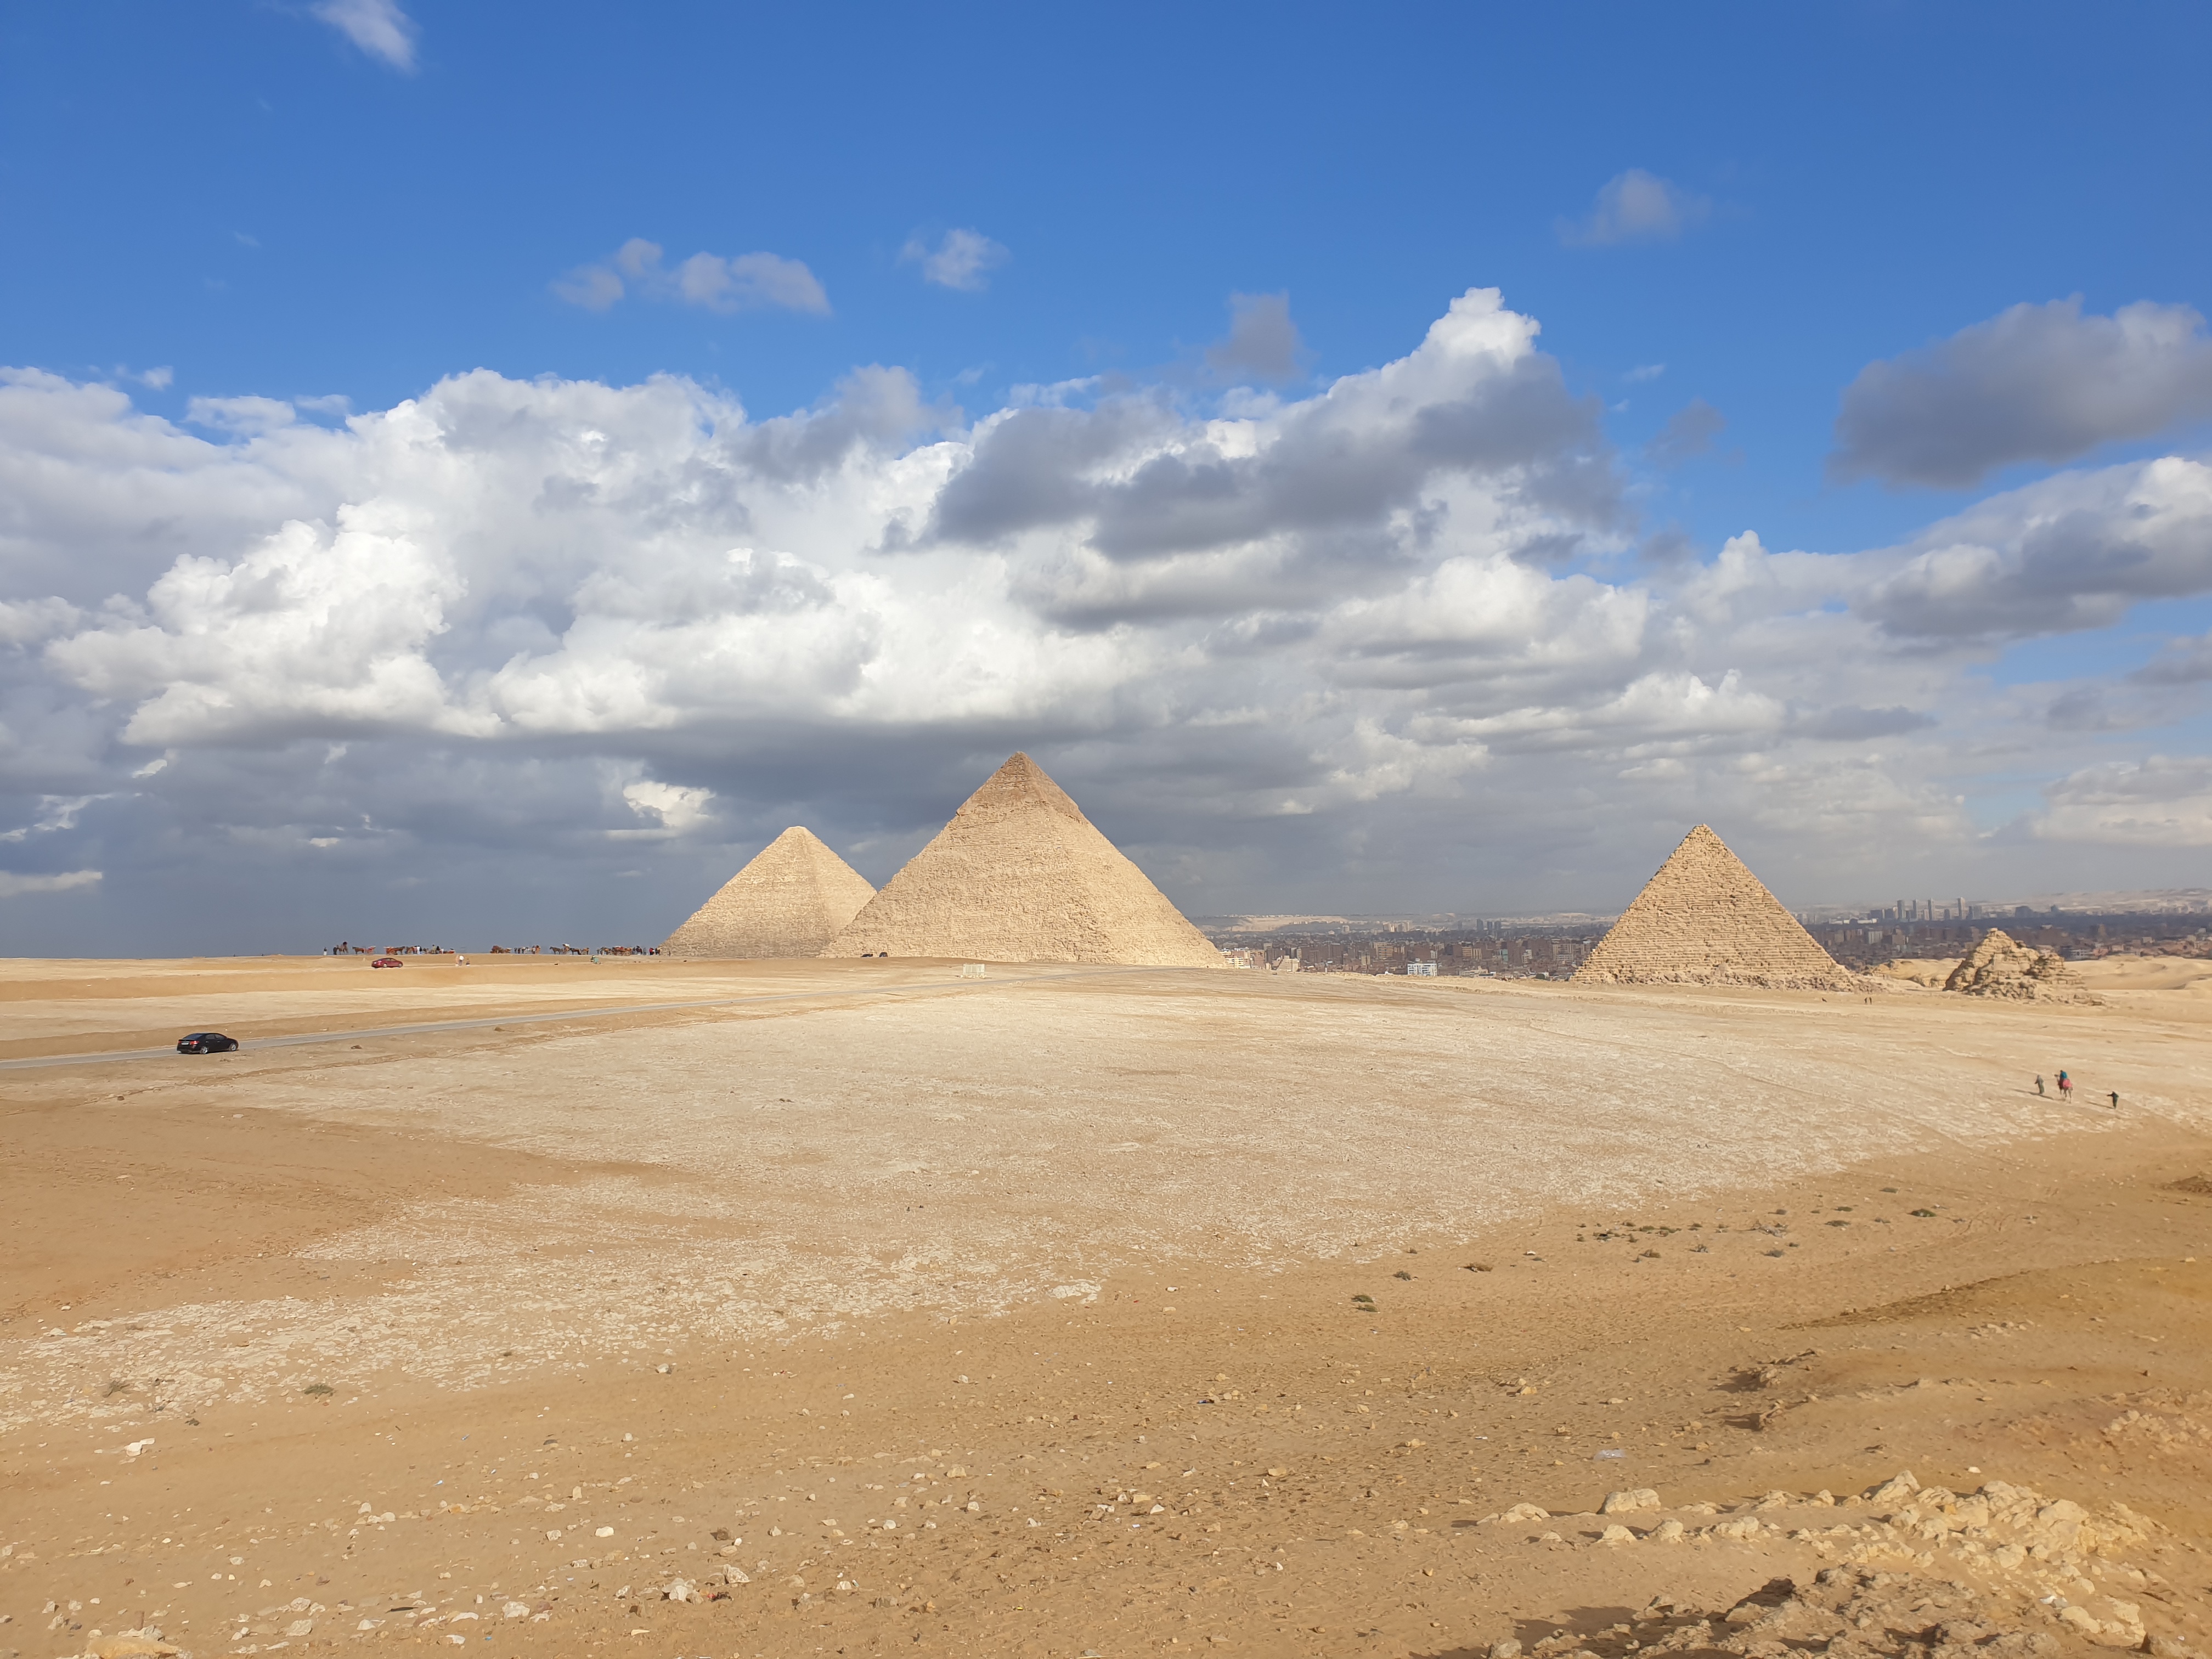 A January journey to Egypt